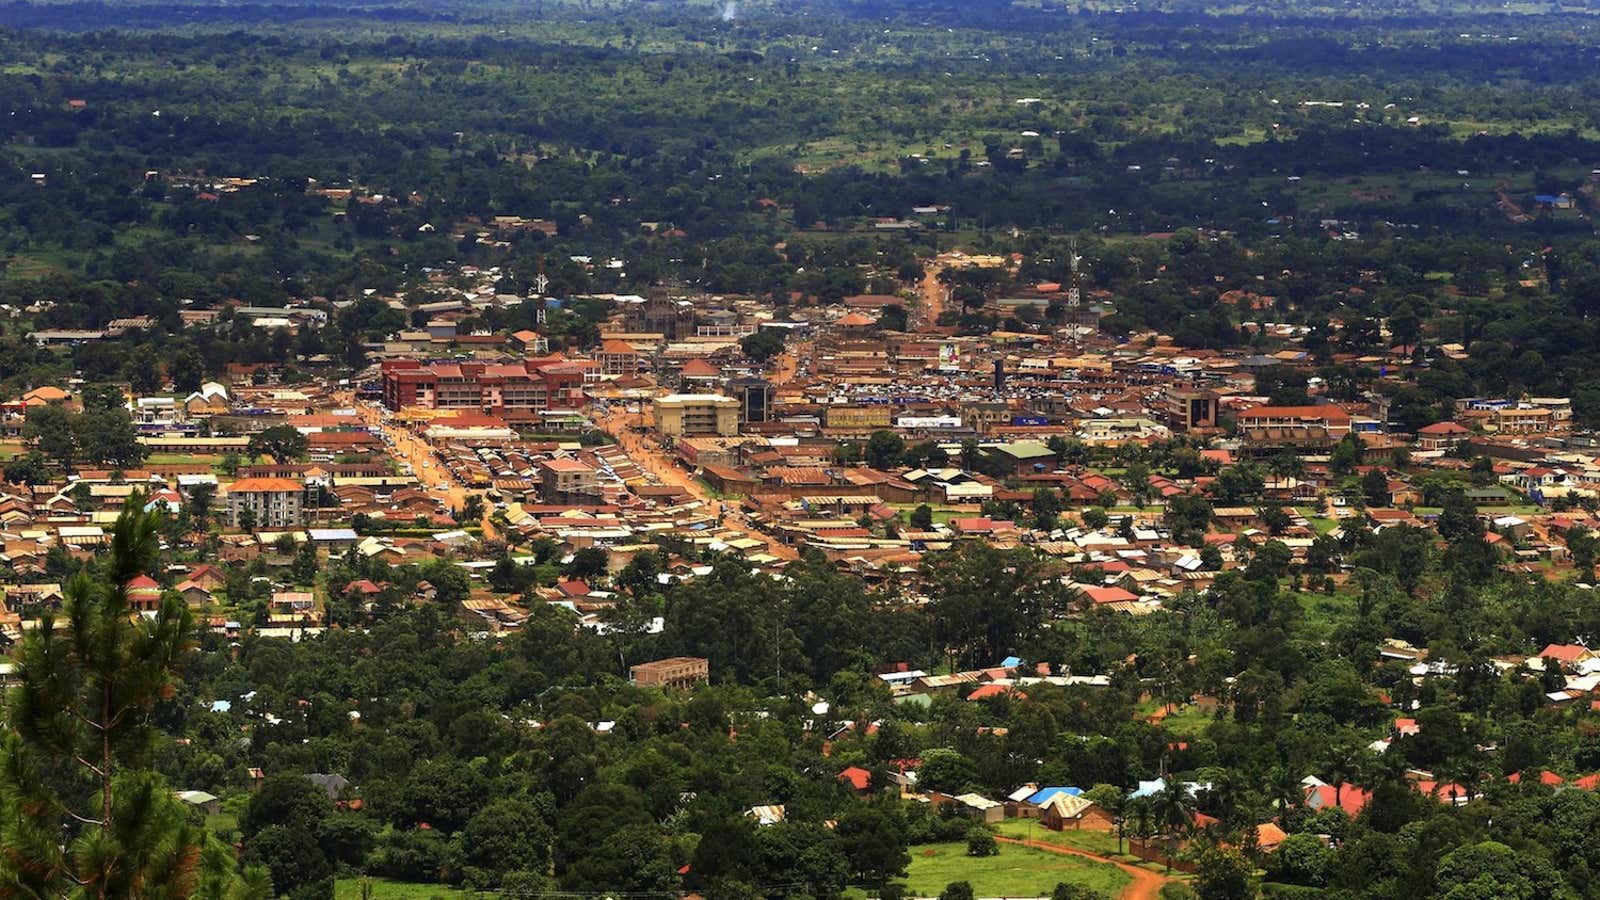 Uganda’s oil boom has transformed the town of Hoima.